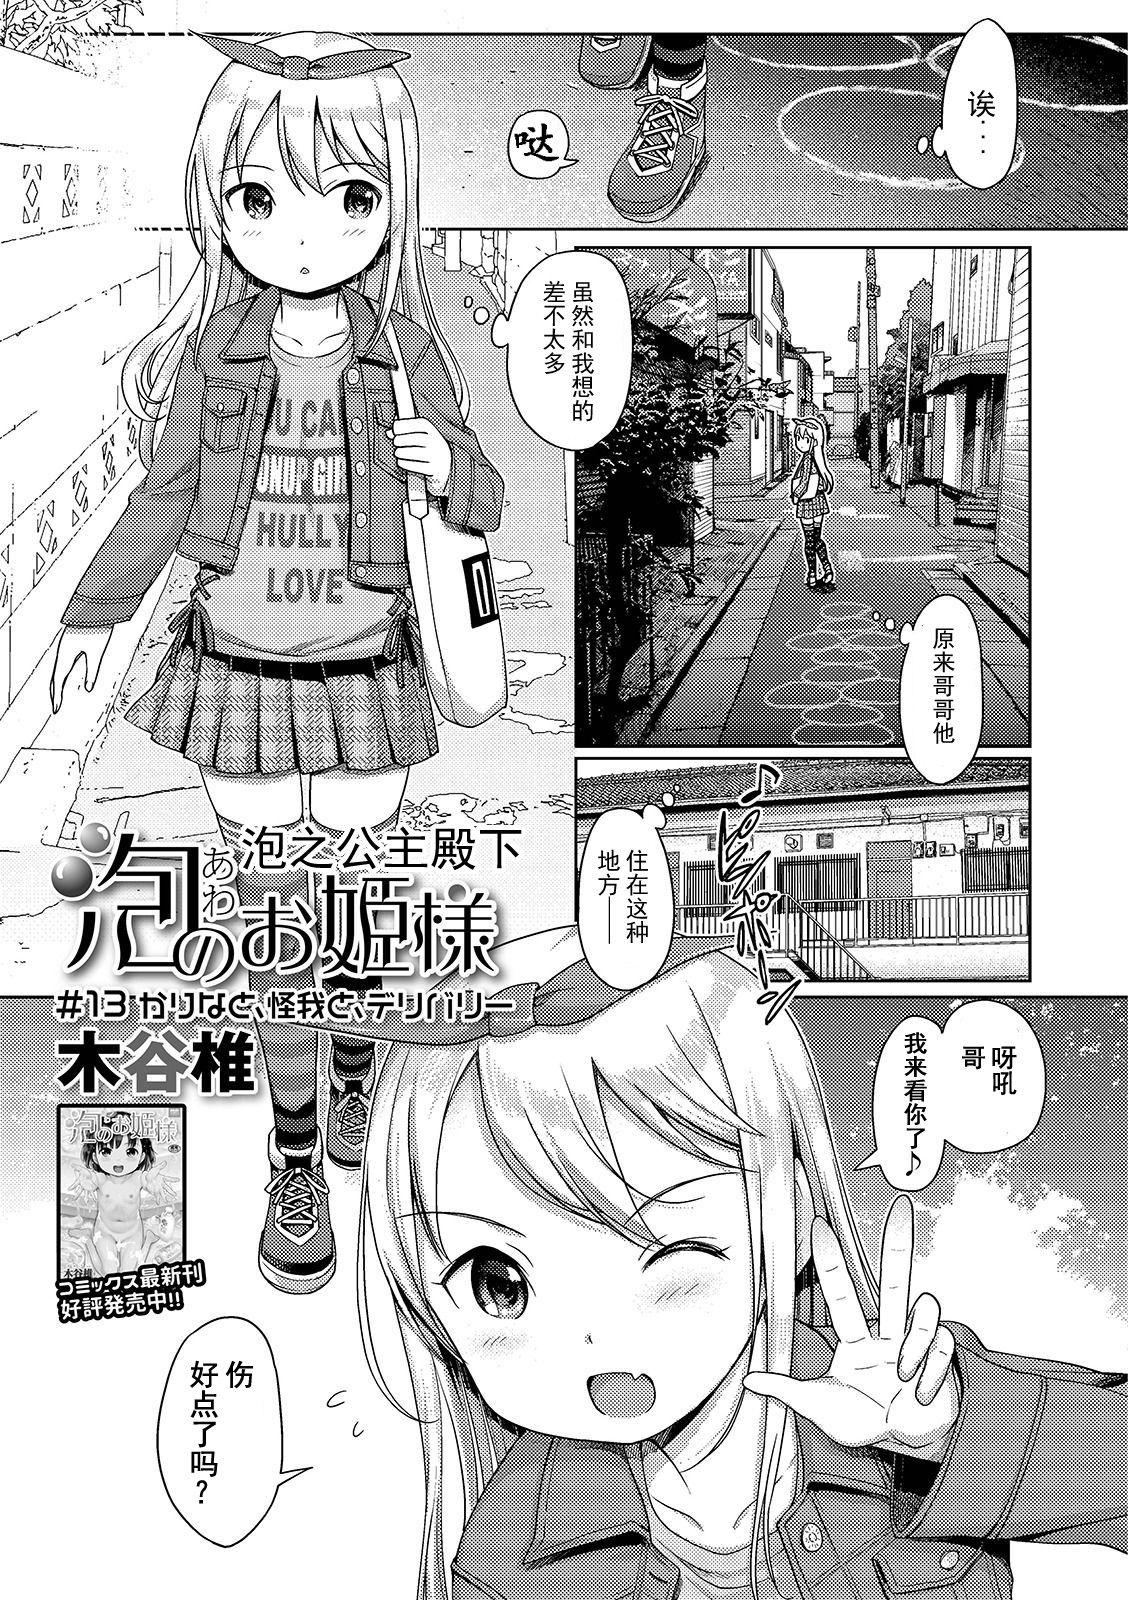 Realitykings Awa no Ohime-sama #13 Karina to, Kega to, Delivery Clit - Page 2